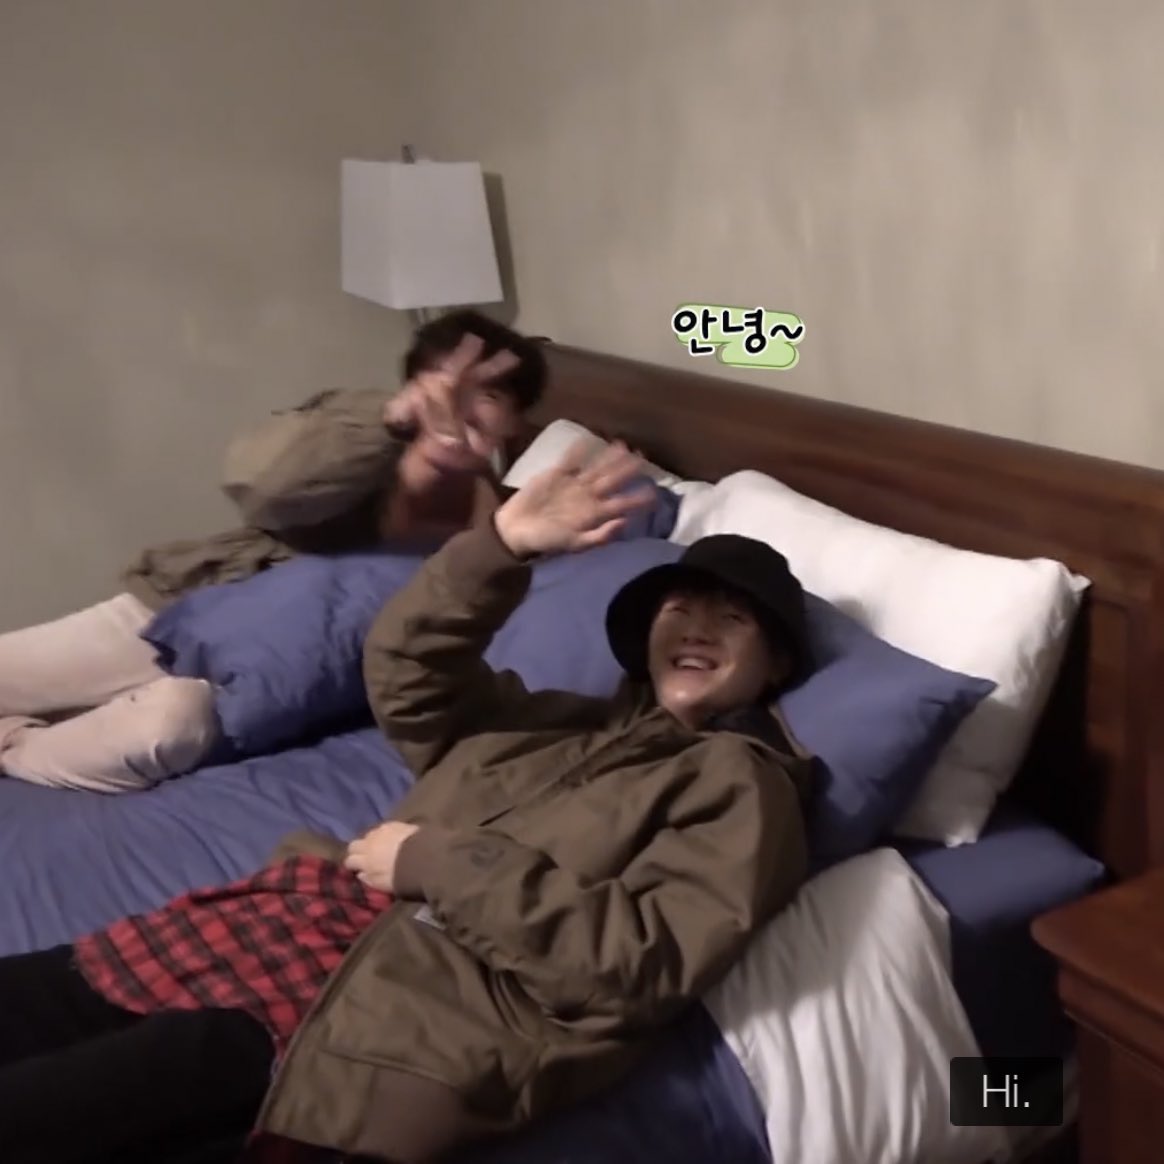 Yoongi and Hobi waving to Namjoon on the bed, HIS REACTION SJDKSKK